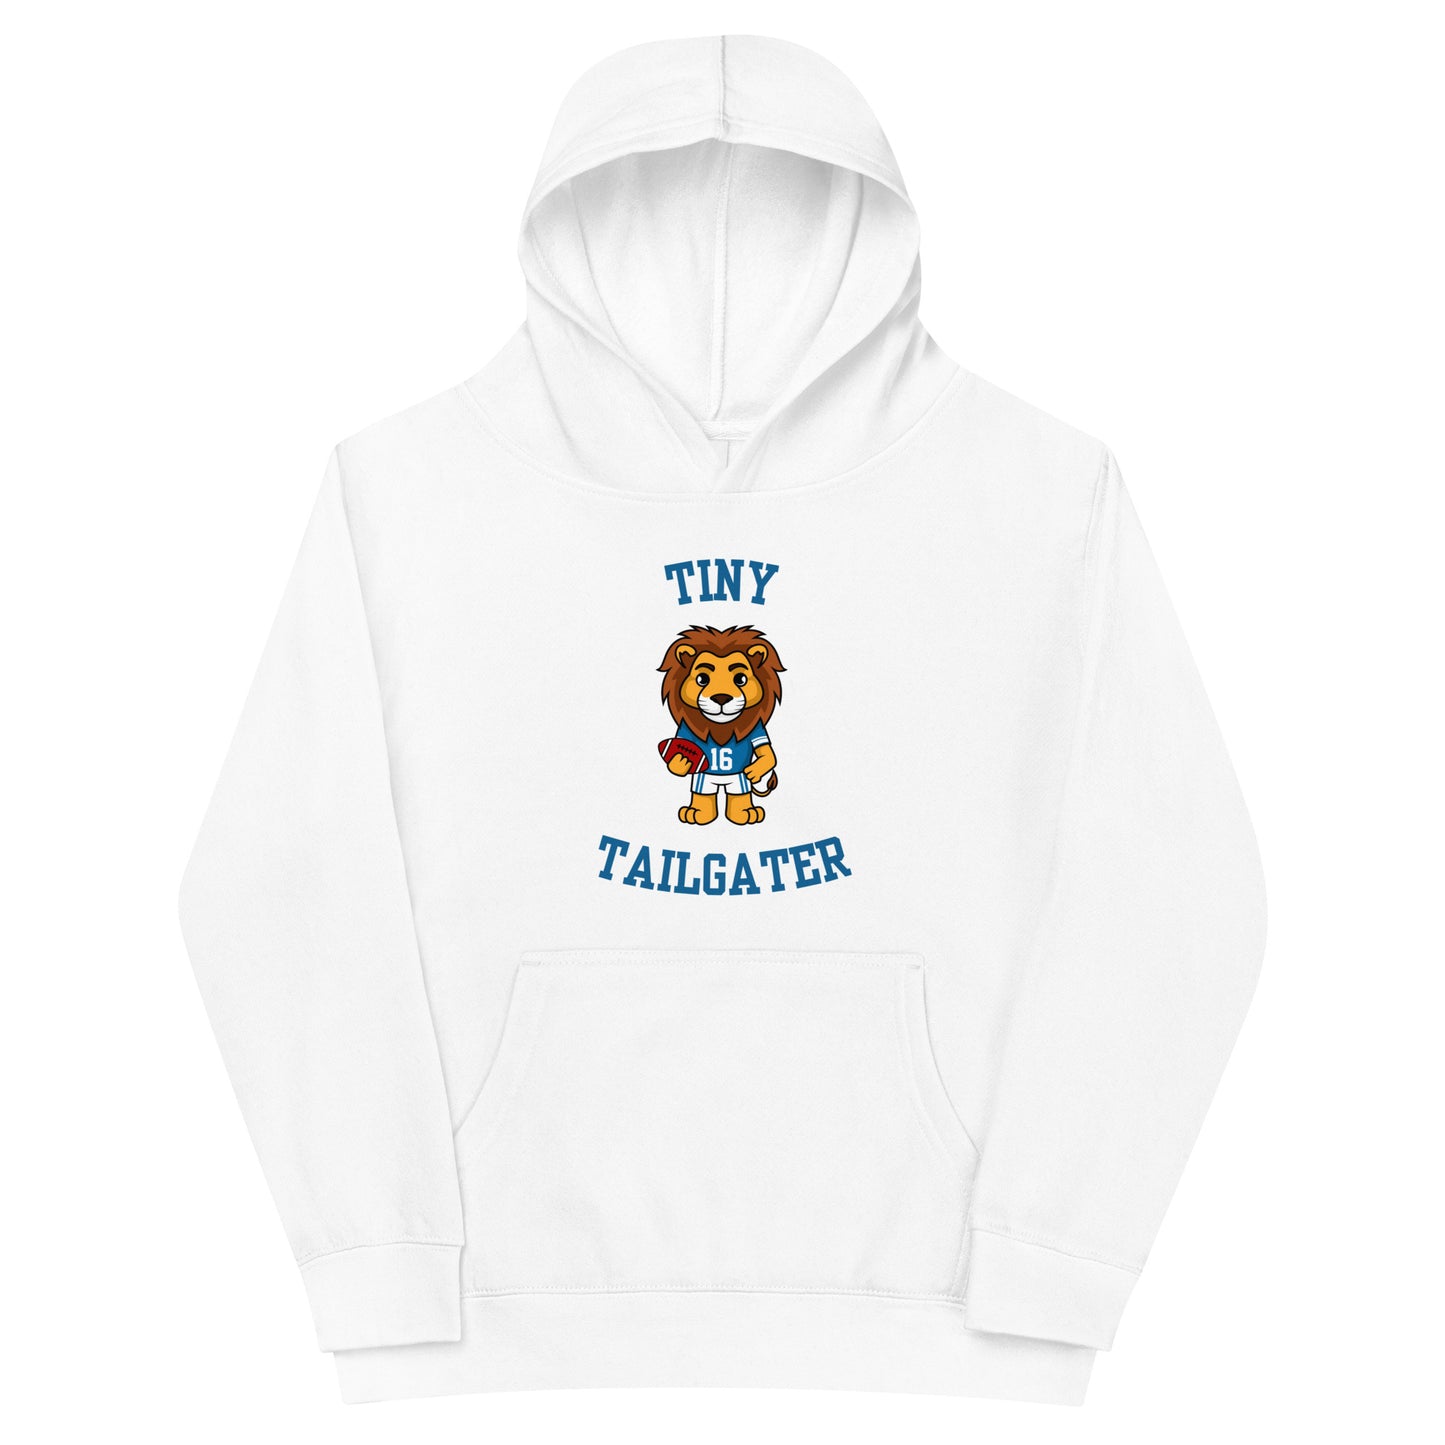 Tiny Tailgater Kids fleece hoodie